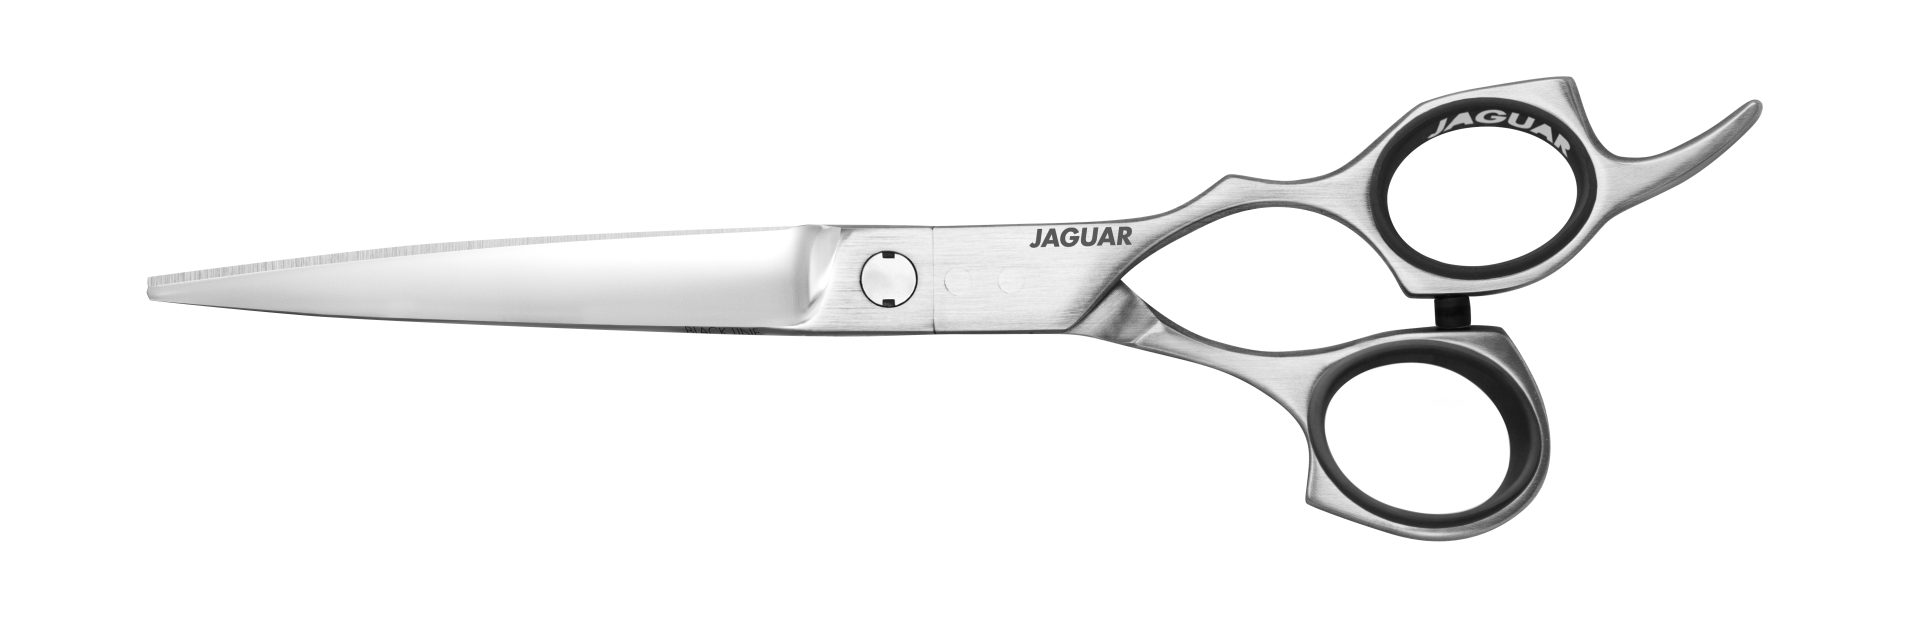 jaguar scissors giant 98650